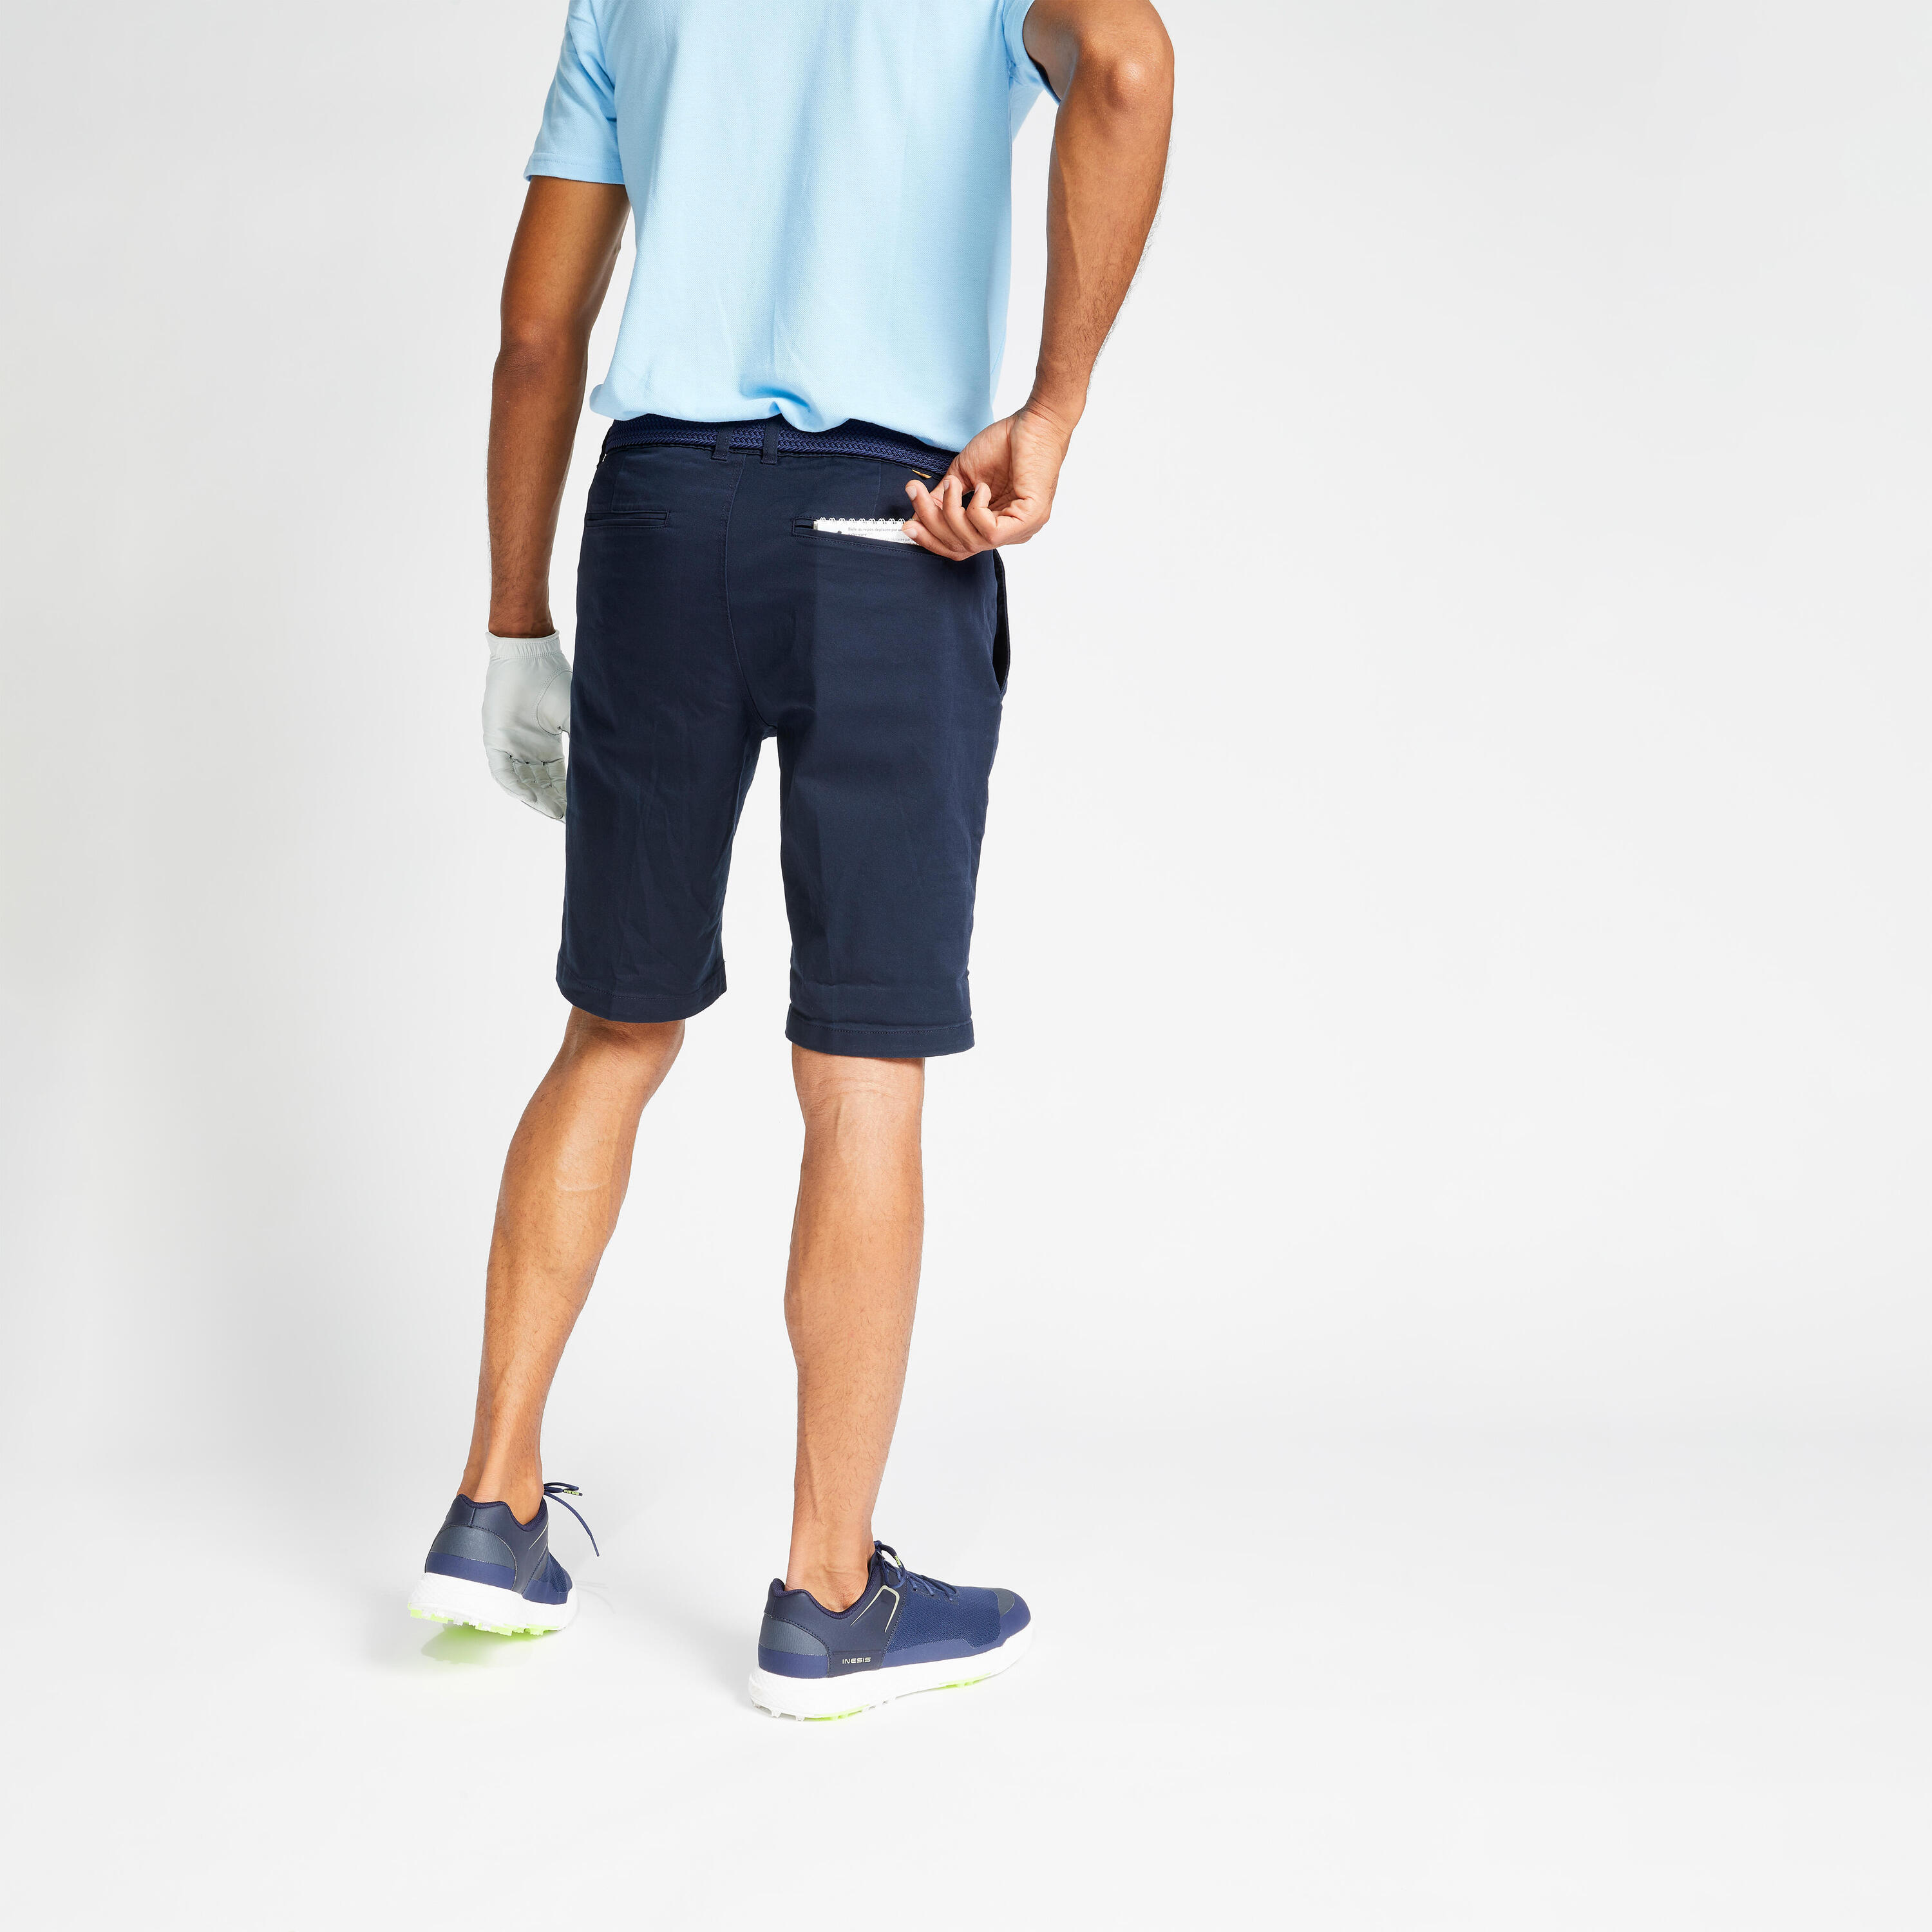 Men's Chino Golf Shorts - MW500 navy blue 2/6